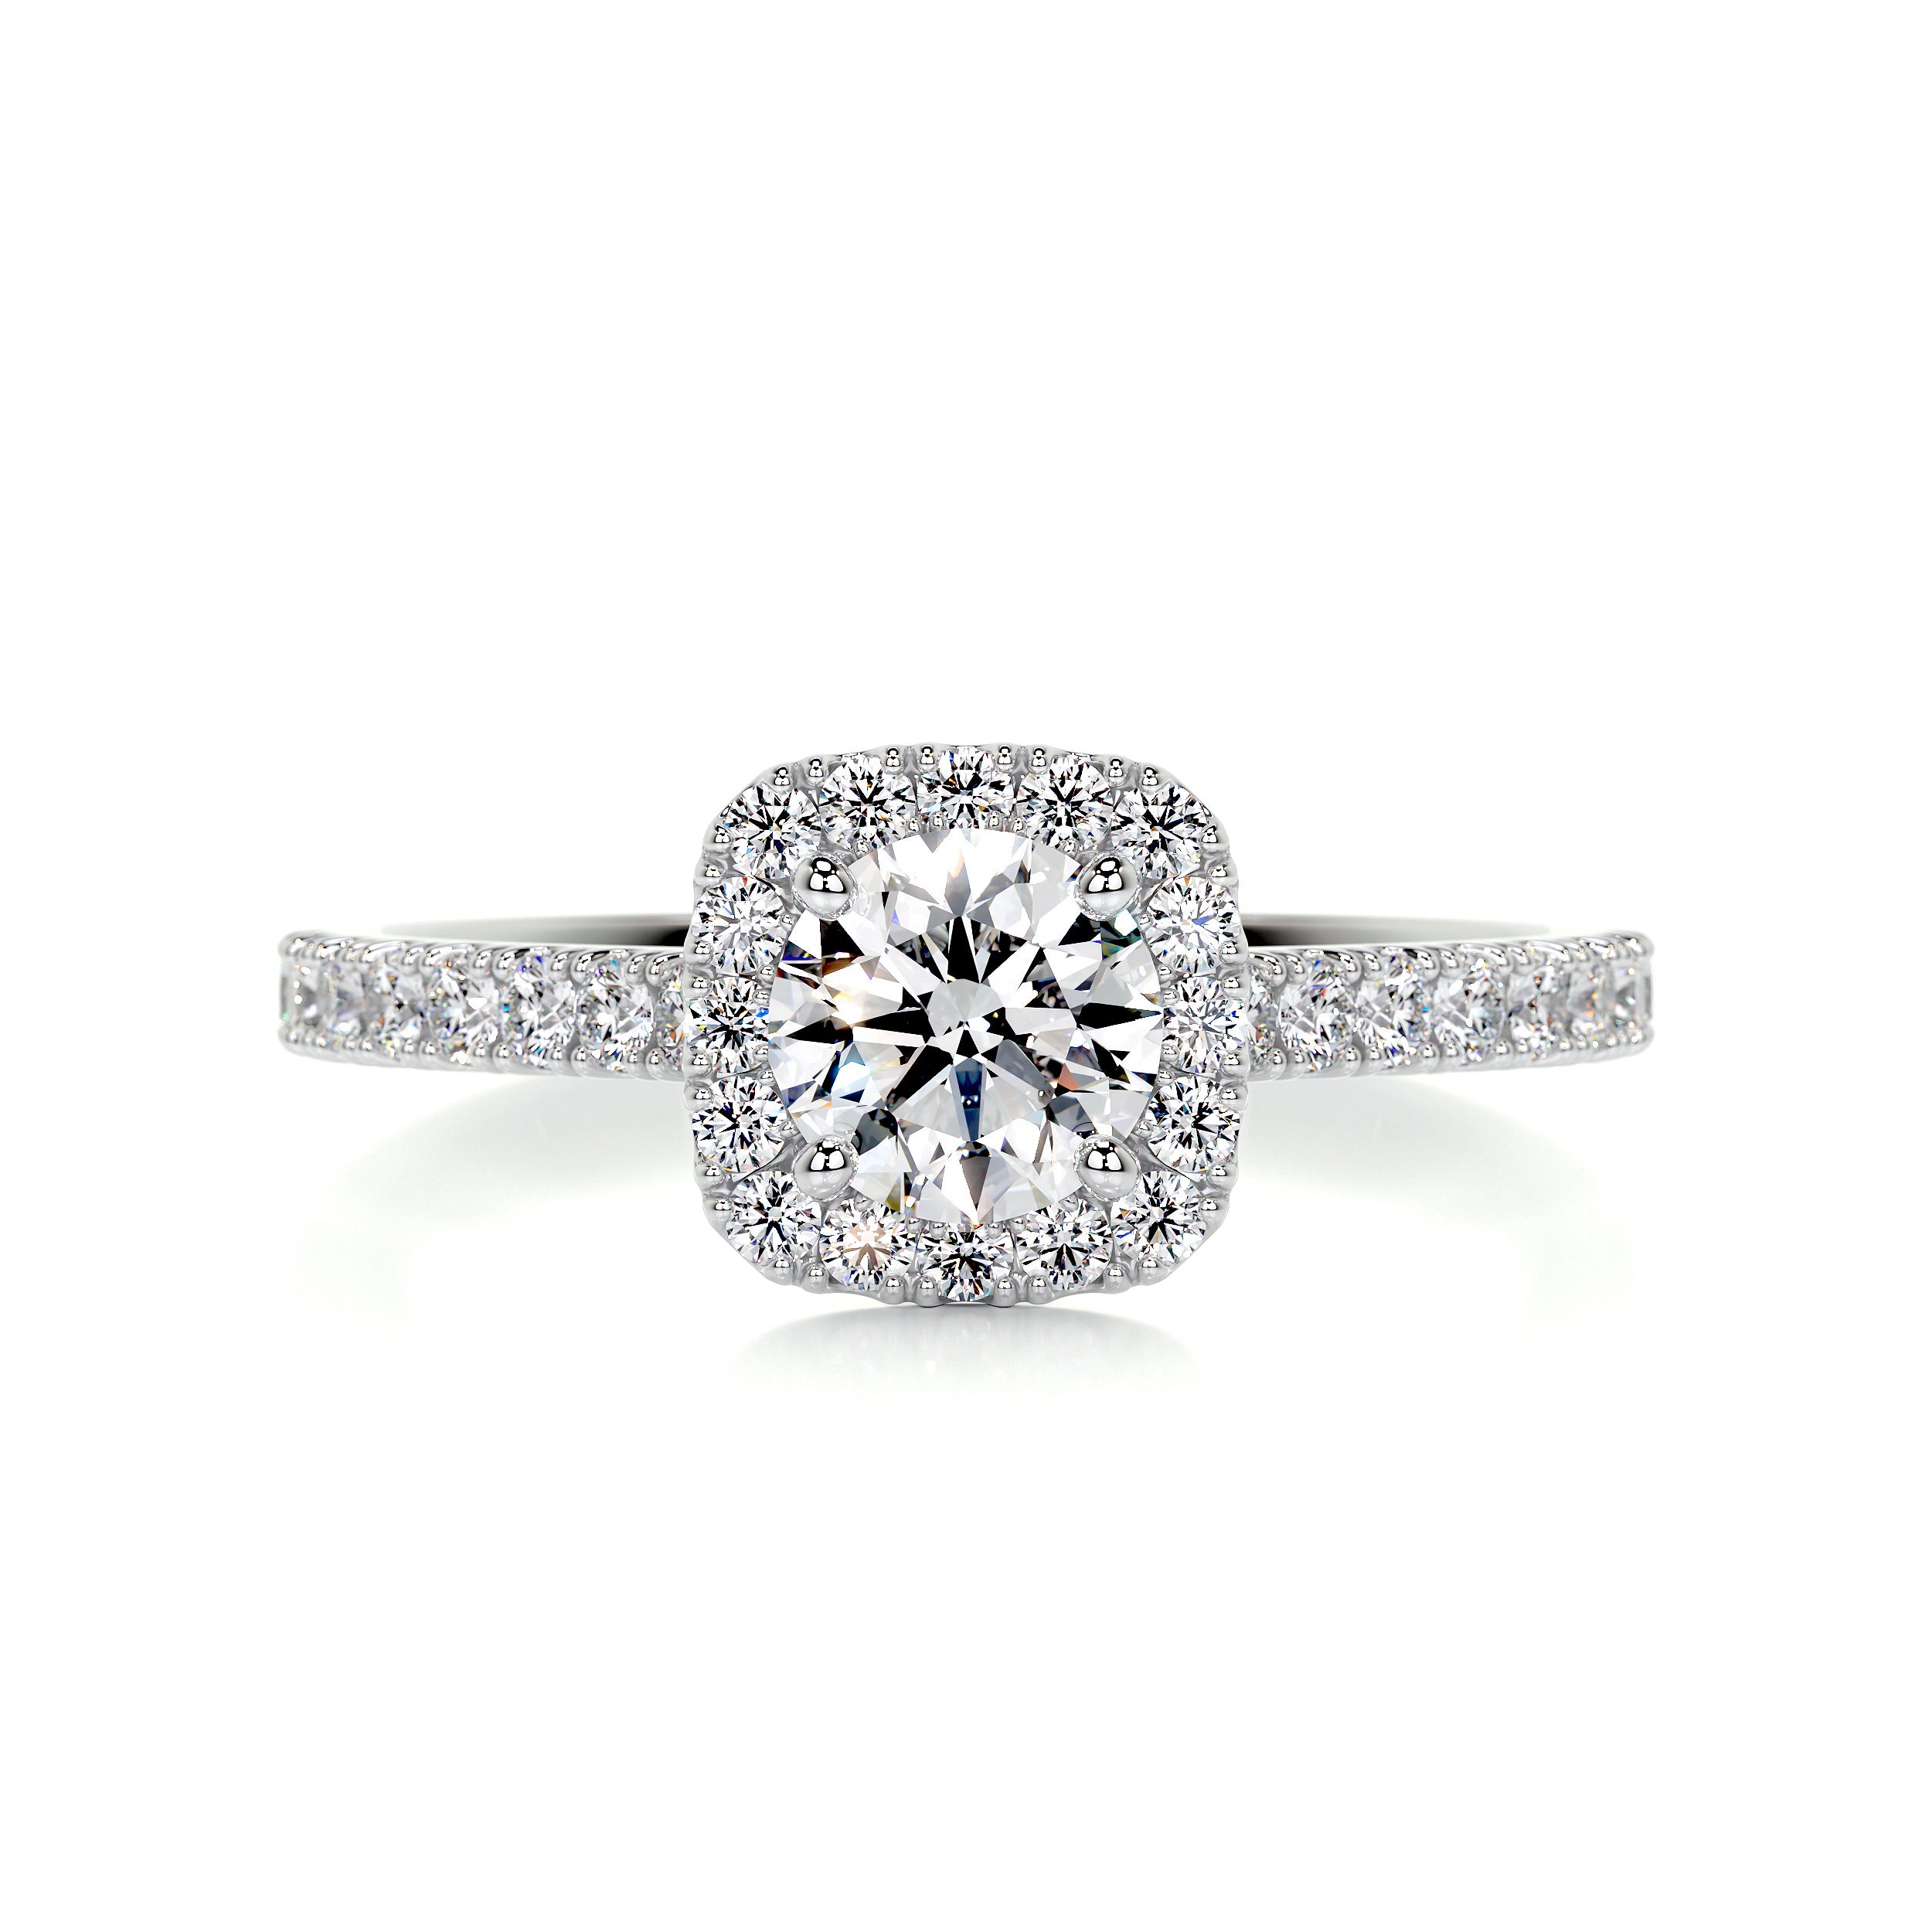 Claudia Diamond Engagement Ring   (0.70 Carat) -14K White Gold